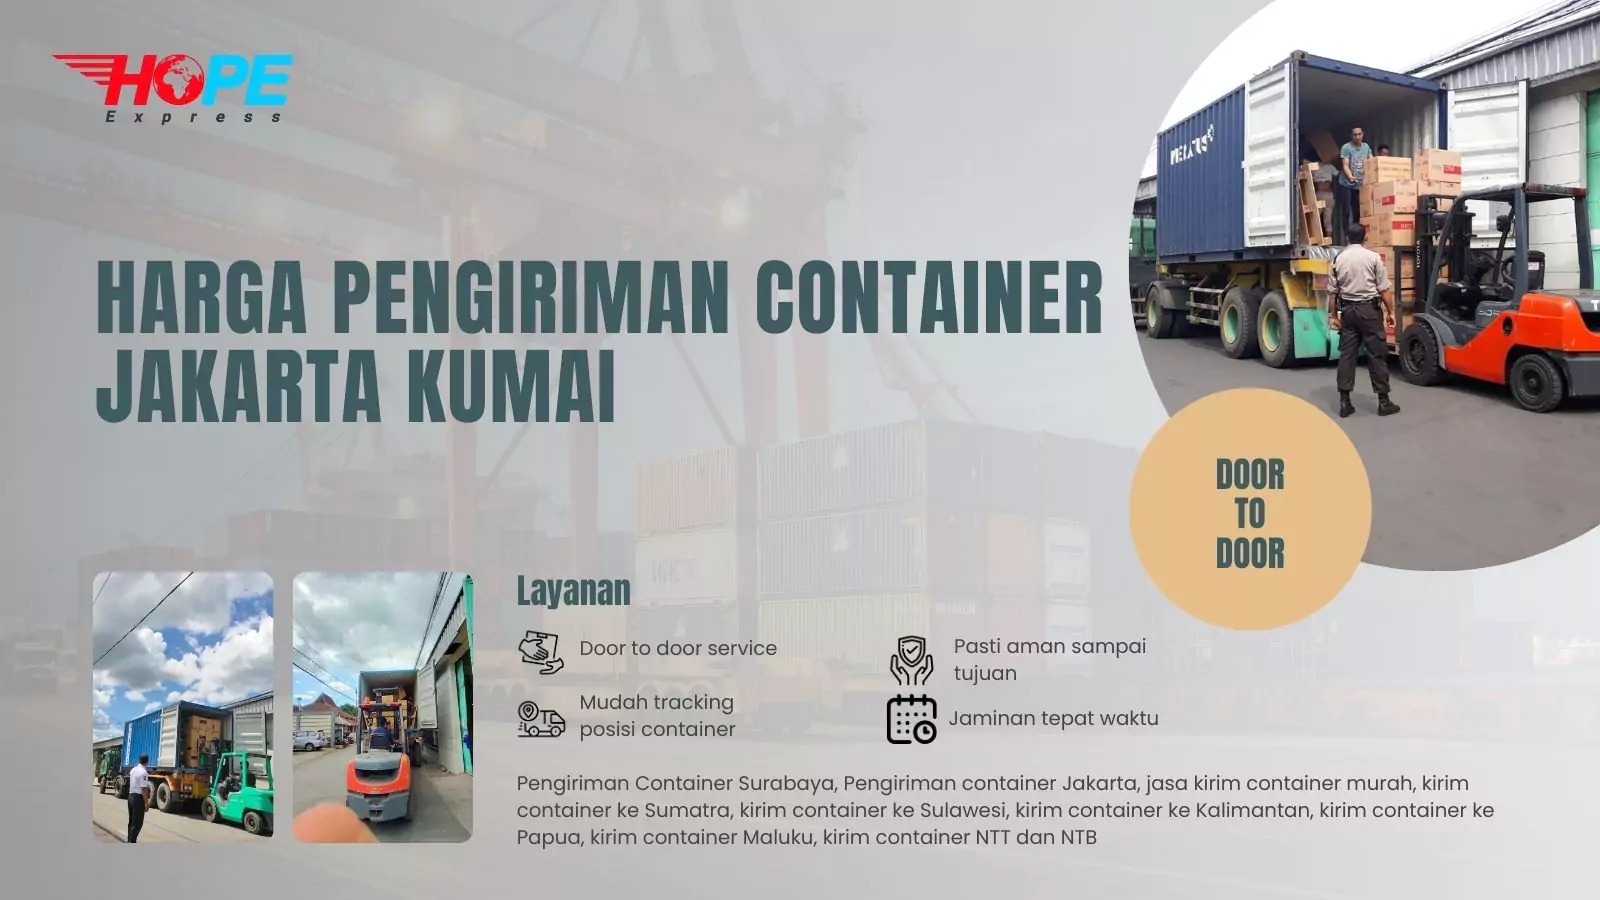 Harga Pengiriman Container Jakarta Kumai